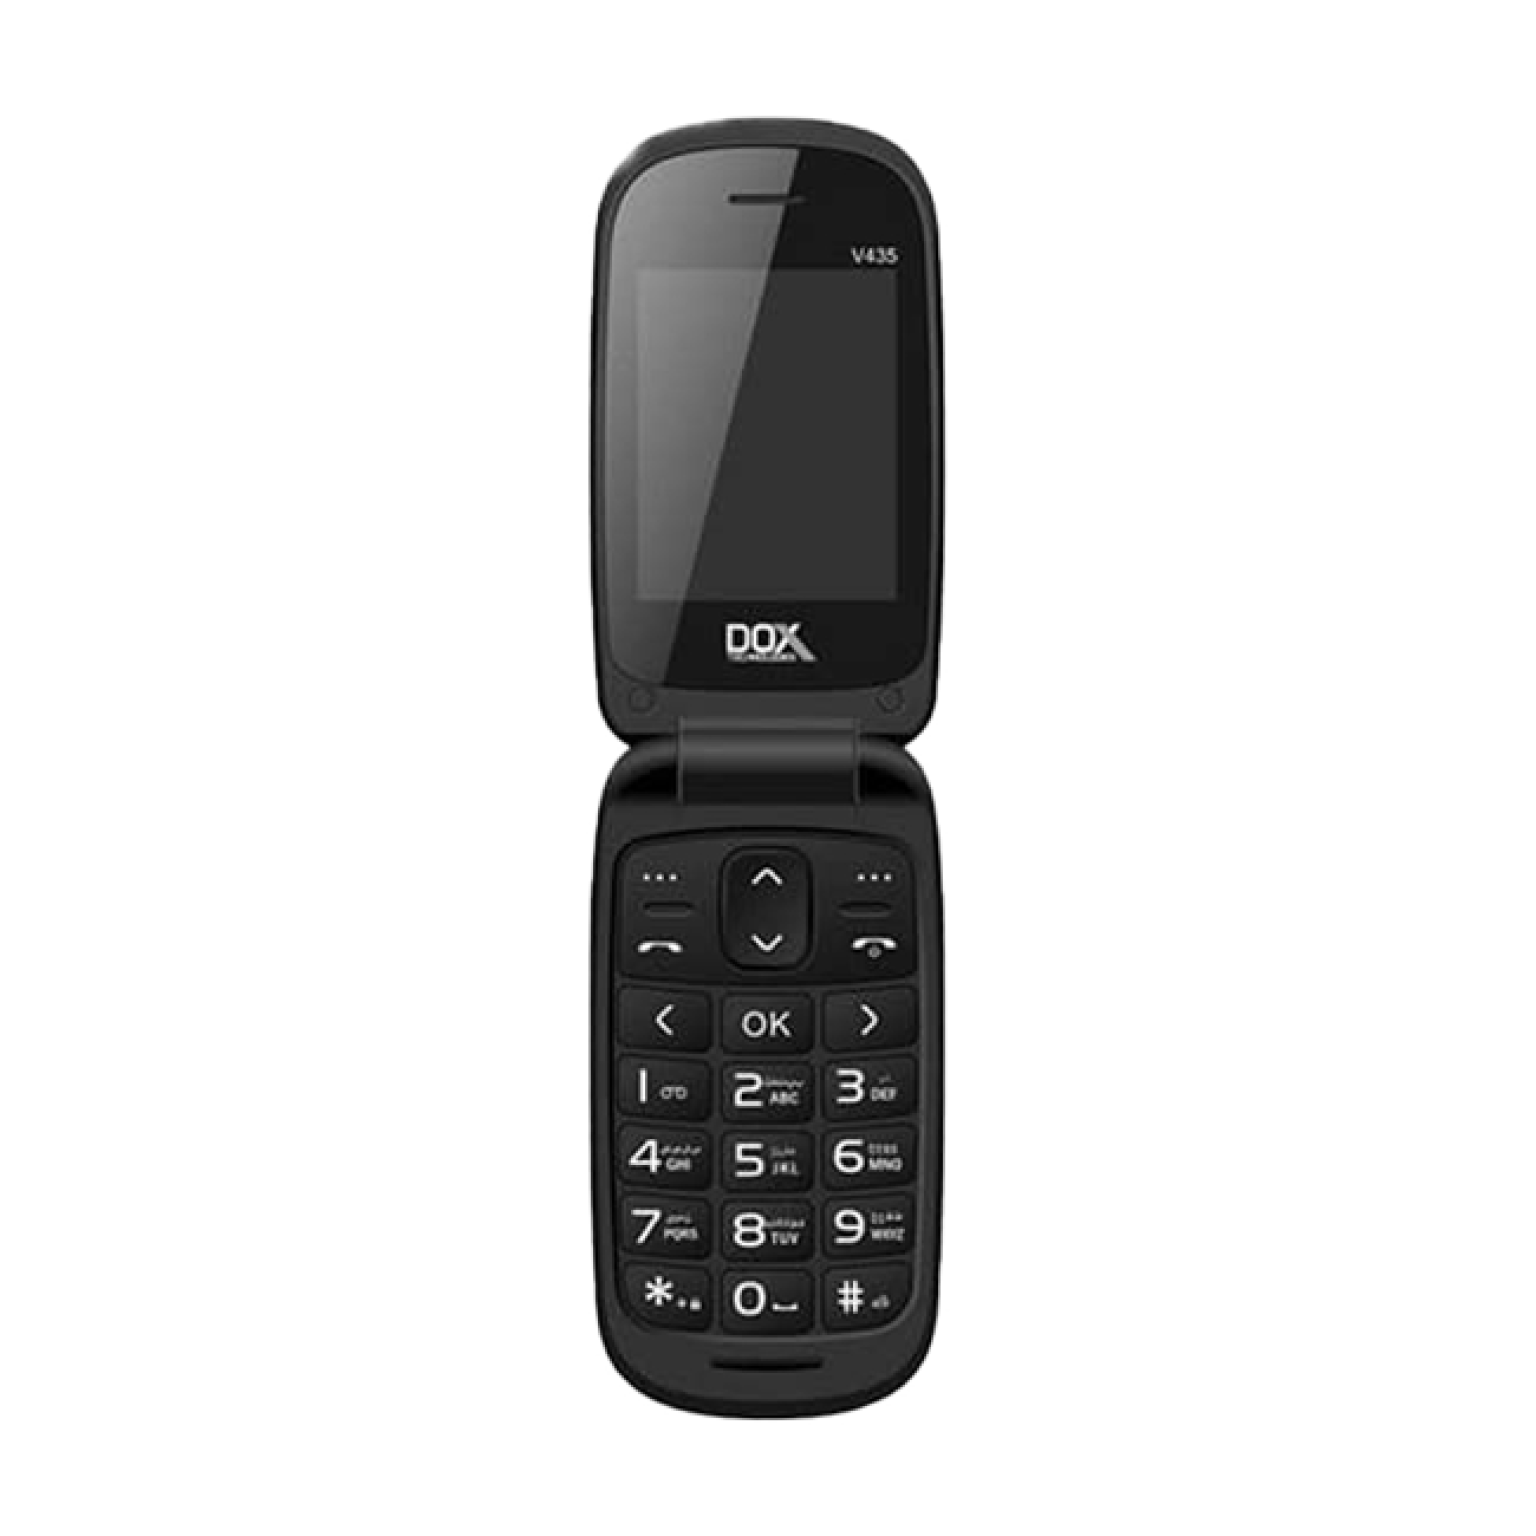 Dox V435 mobile phone black